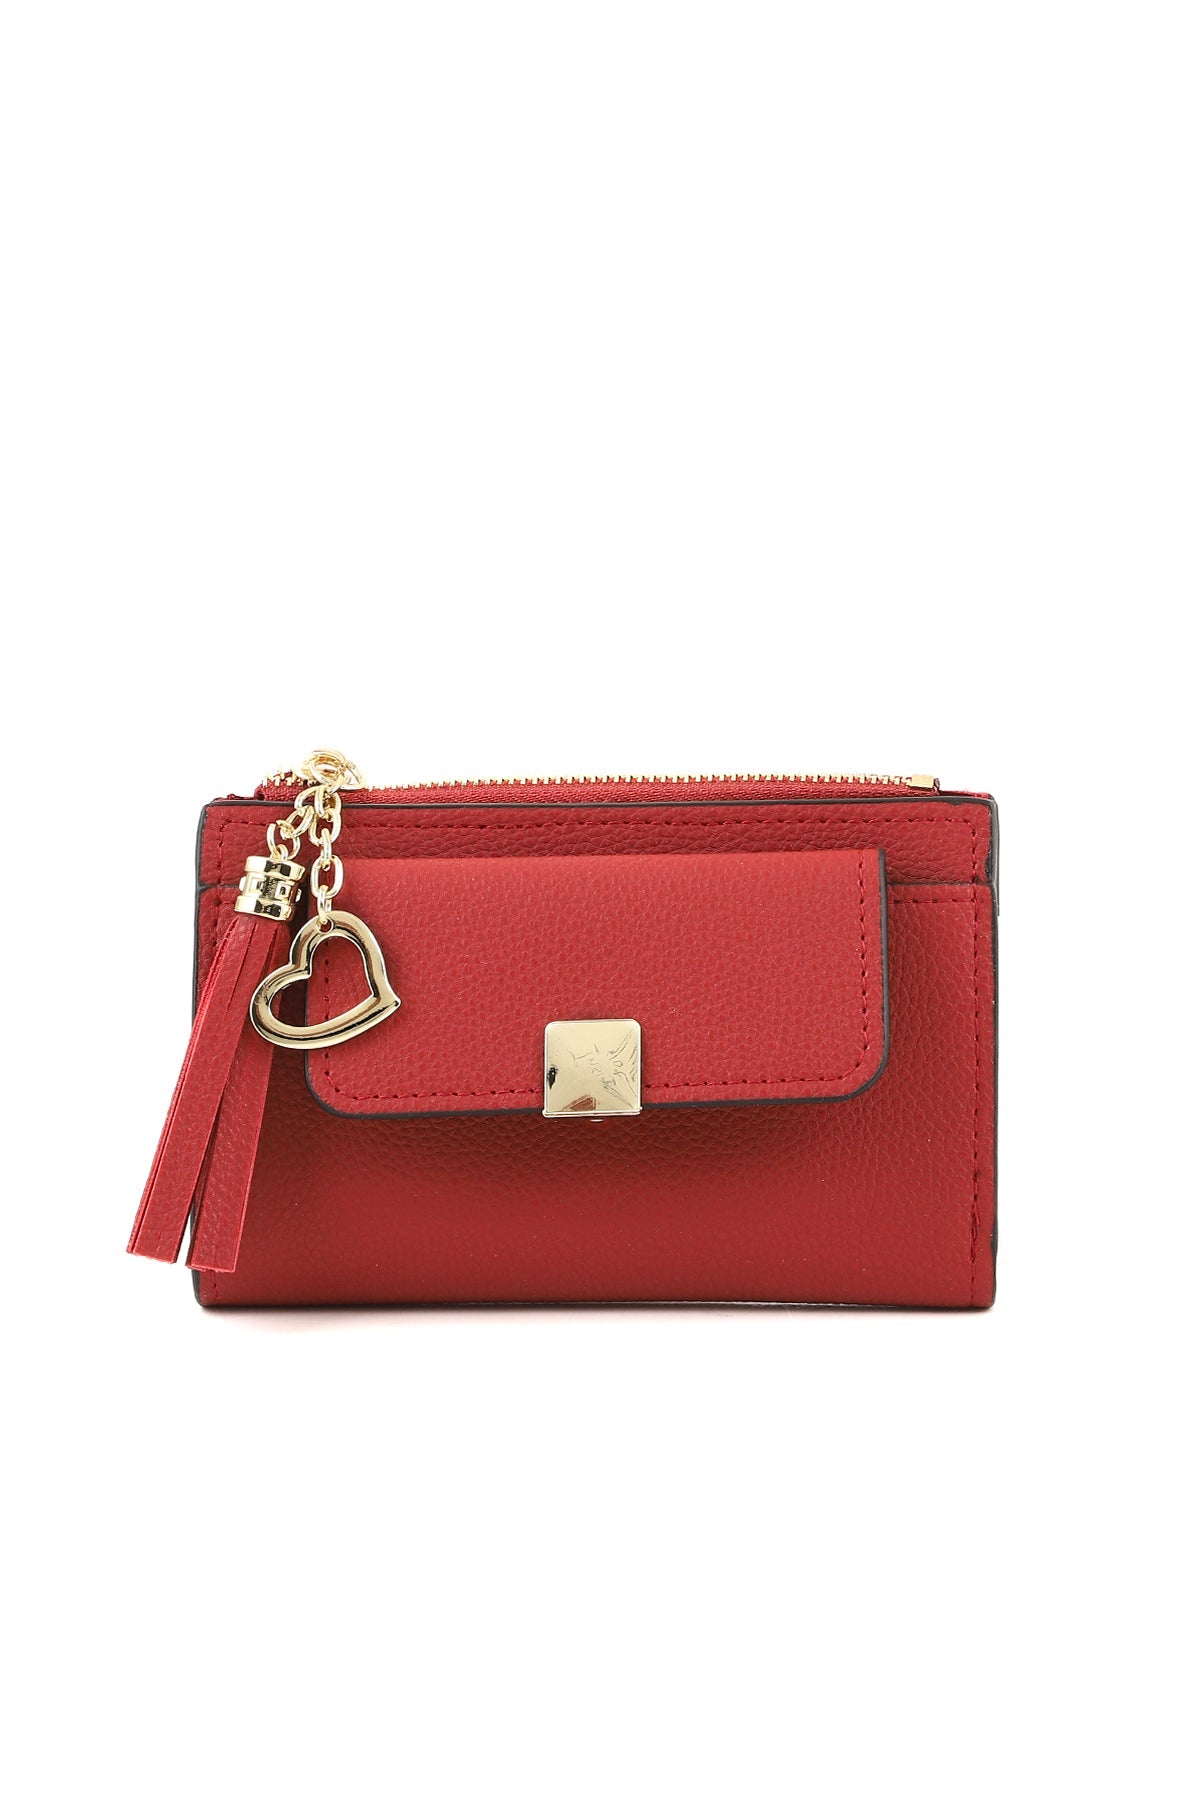 Wristlet Wallet B26042-Red